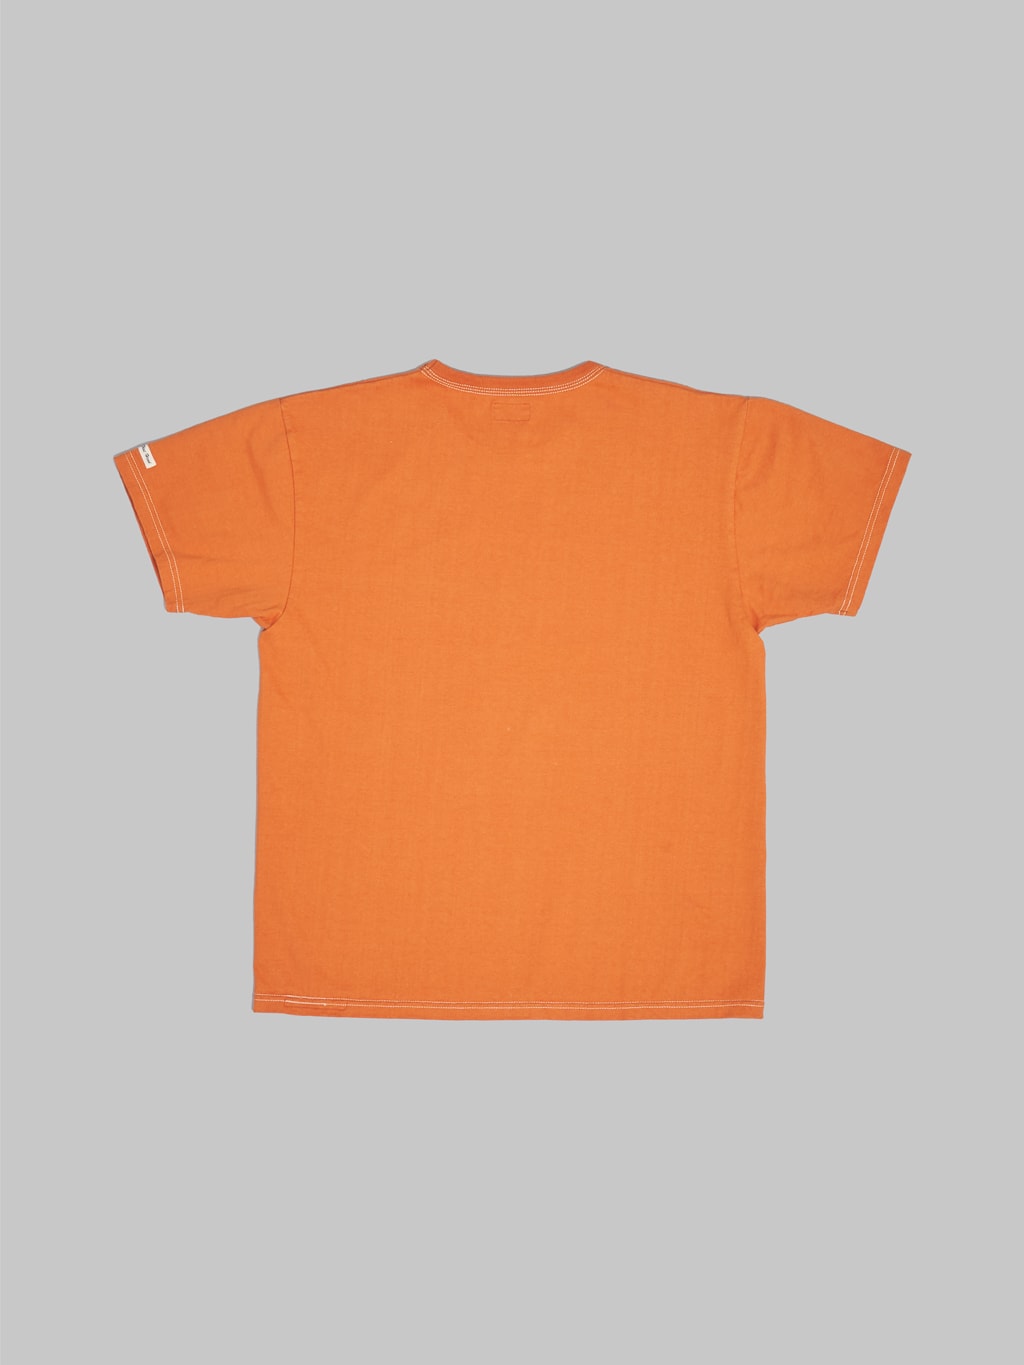 The Flat Head Loopwheeled Heavyweight Plain TShirt Dark Orange back